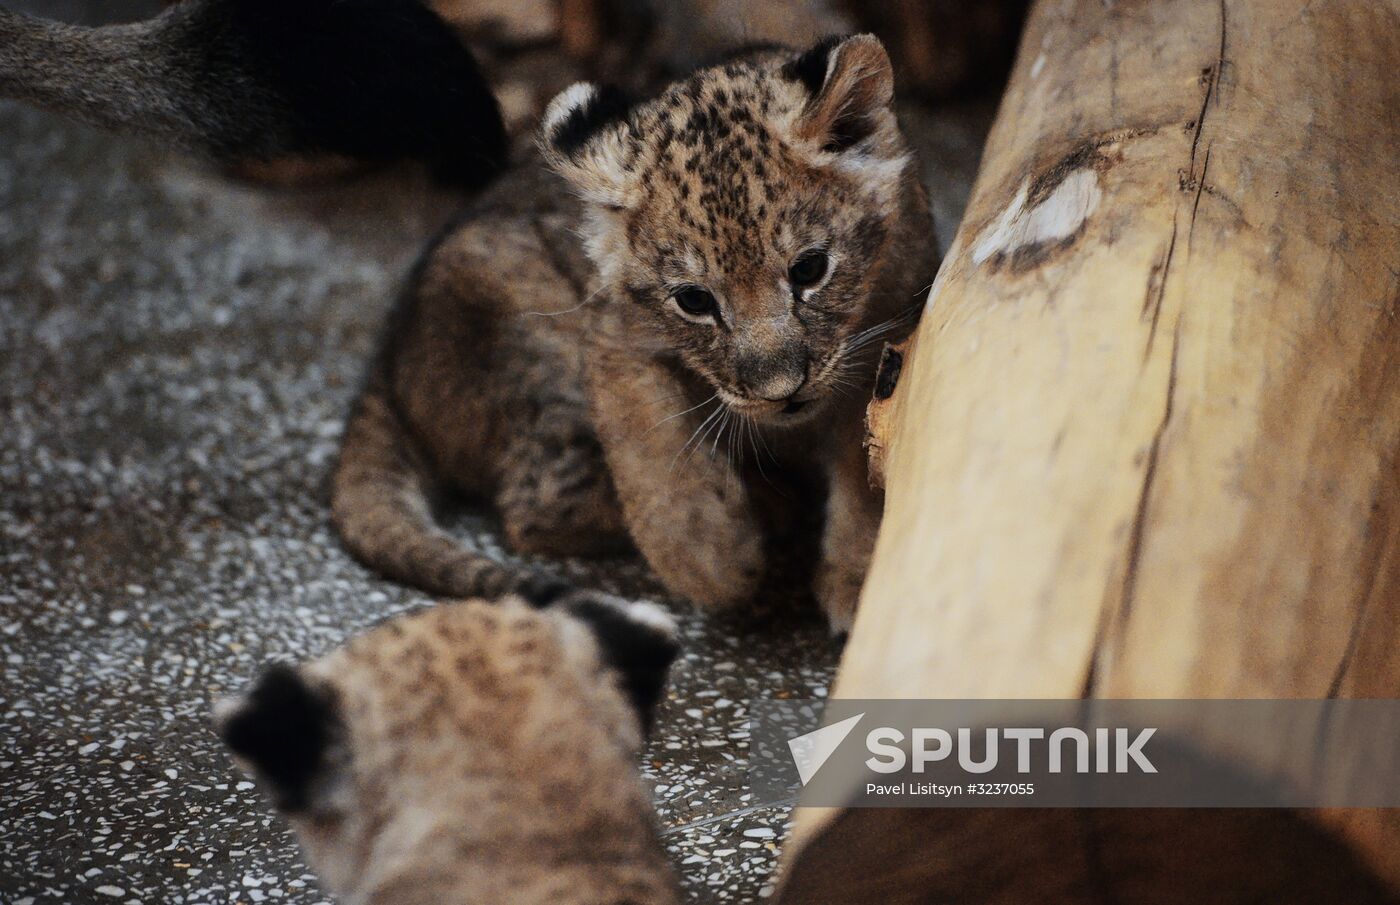 Lion cubs at Yekaterinburg Zoo